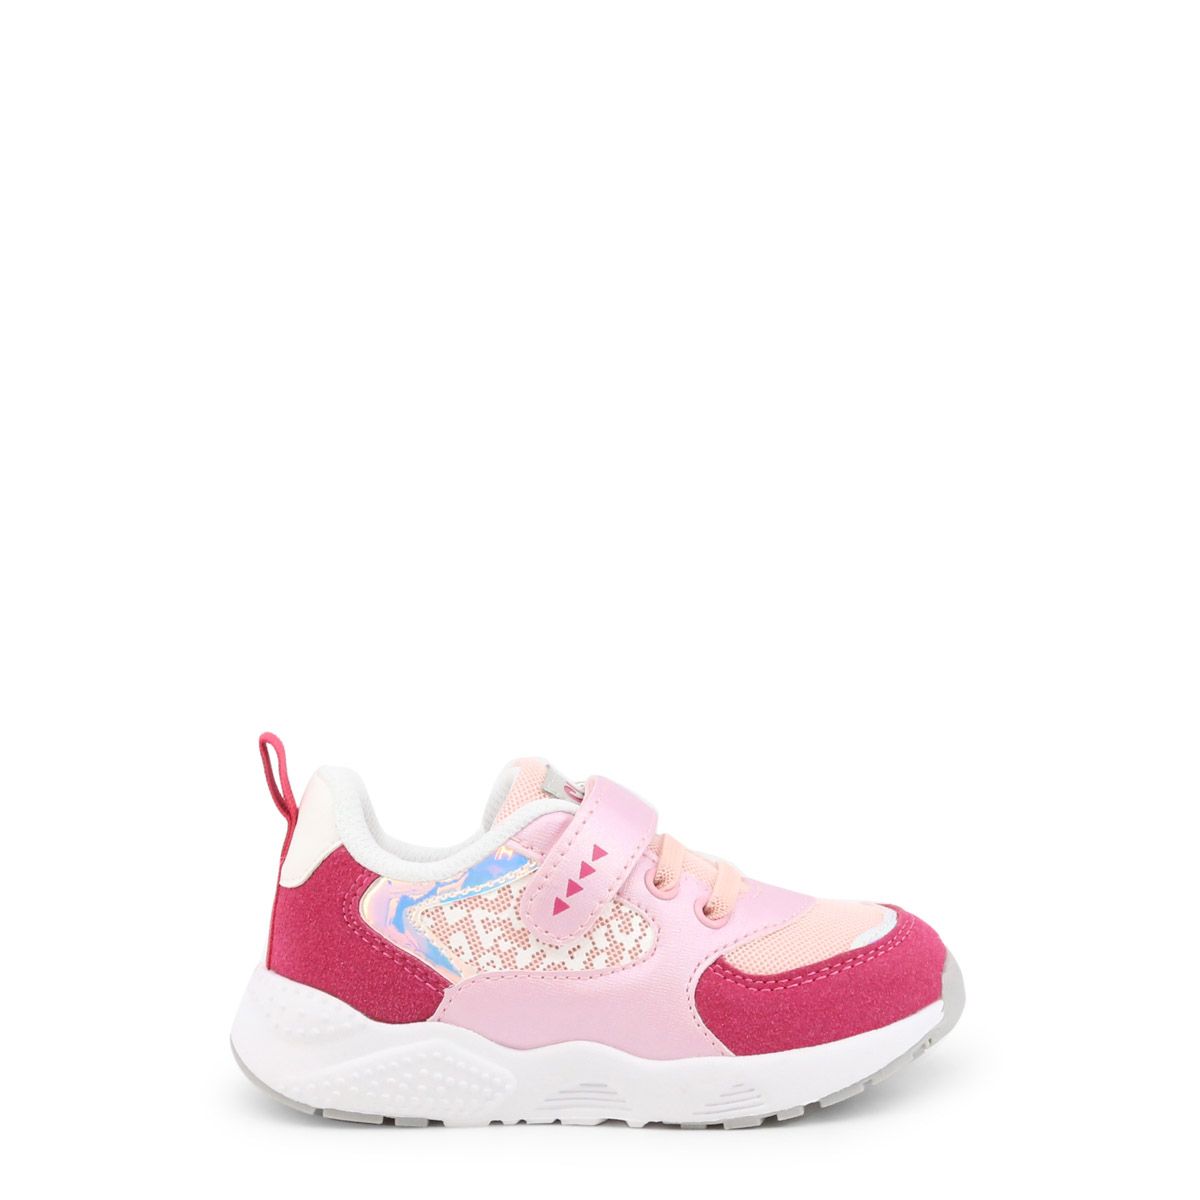 Schuhe & Sneakers & Kinder & Shone & 10260-022_Fuxia & Rosa